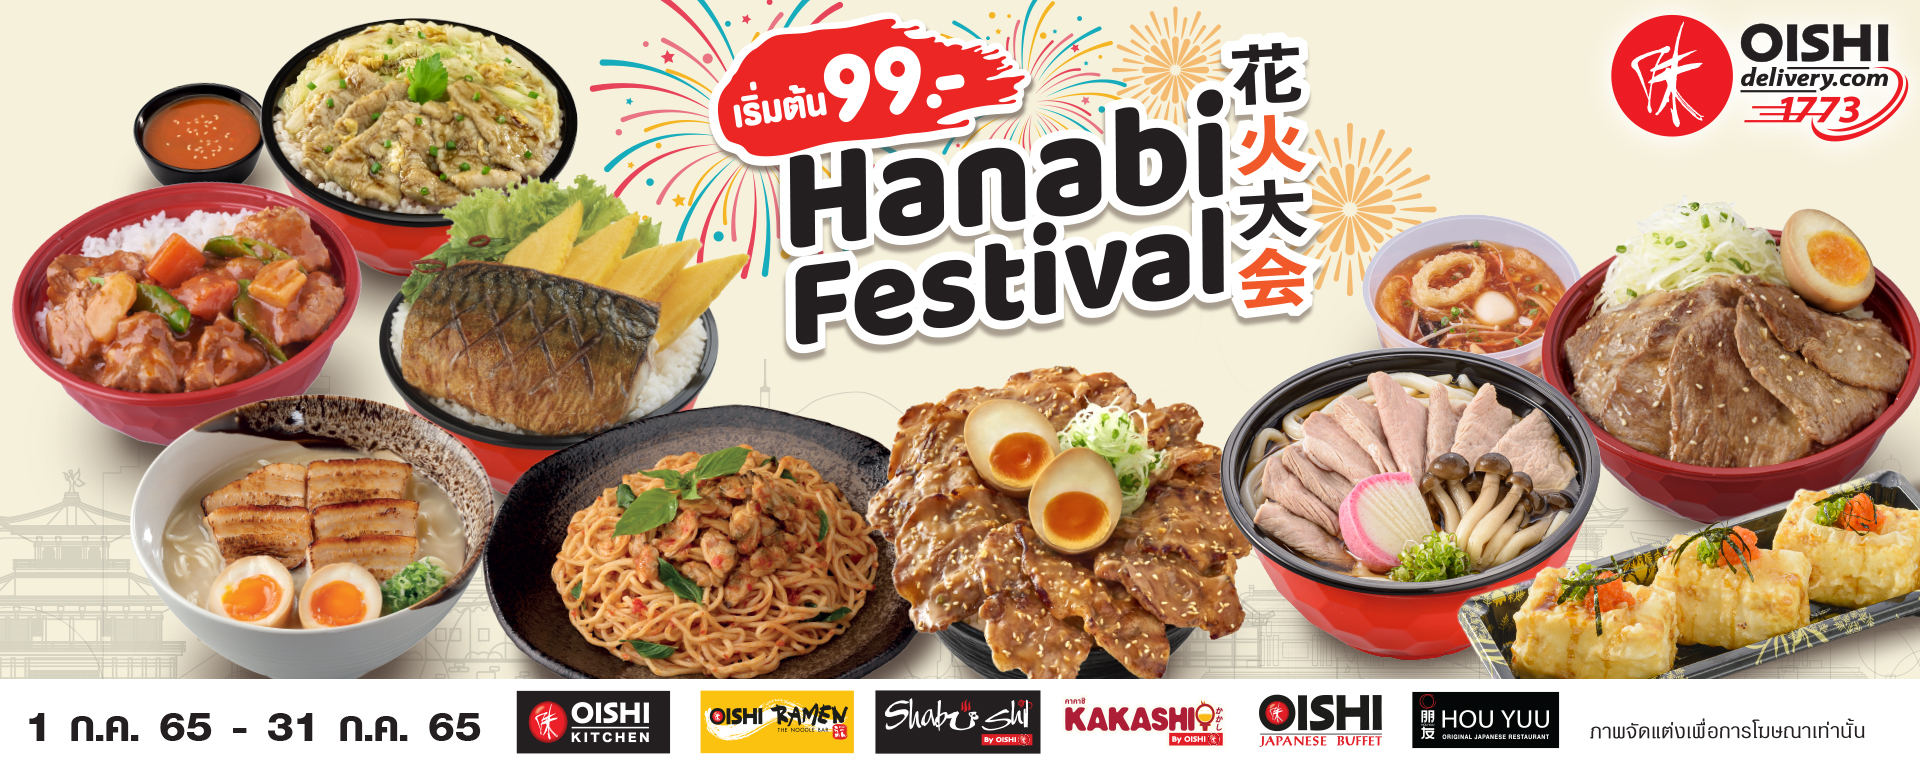 Hanabi Oishidelivery.com